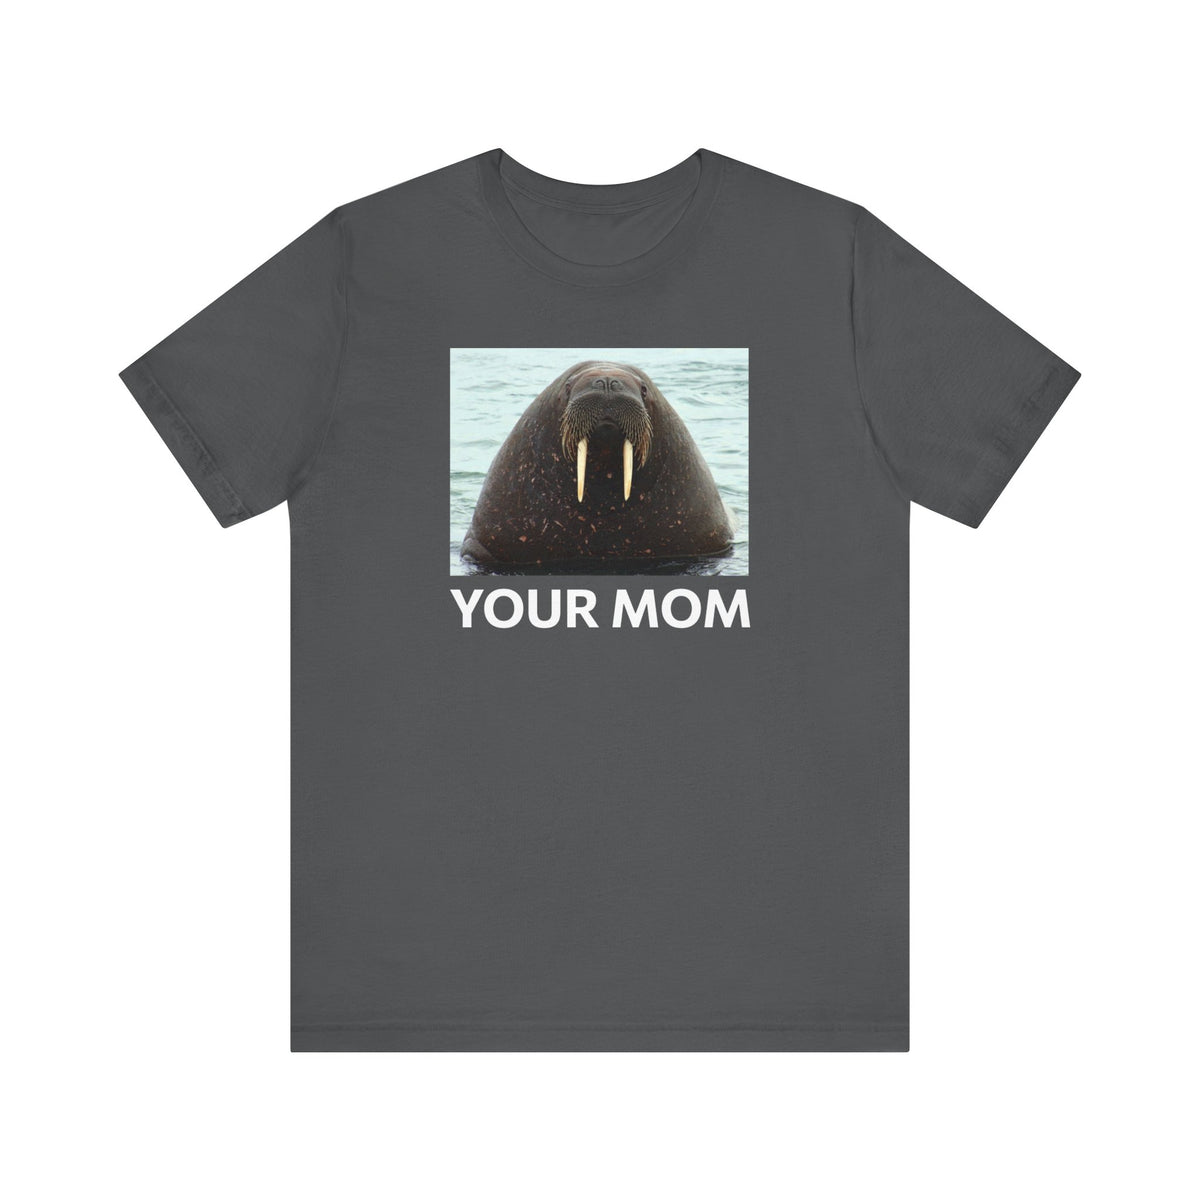 Your Mom - Men's T-Shirt